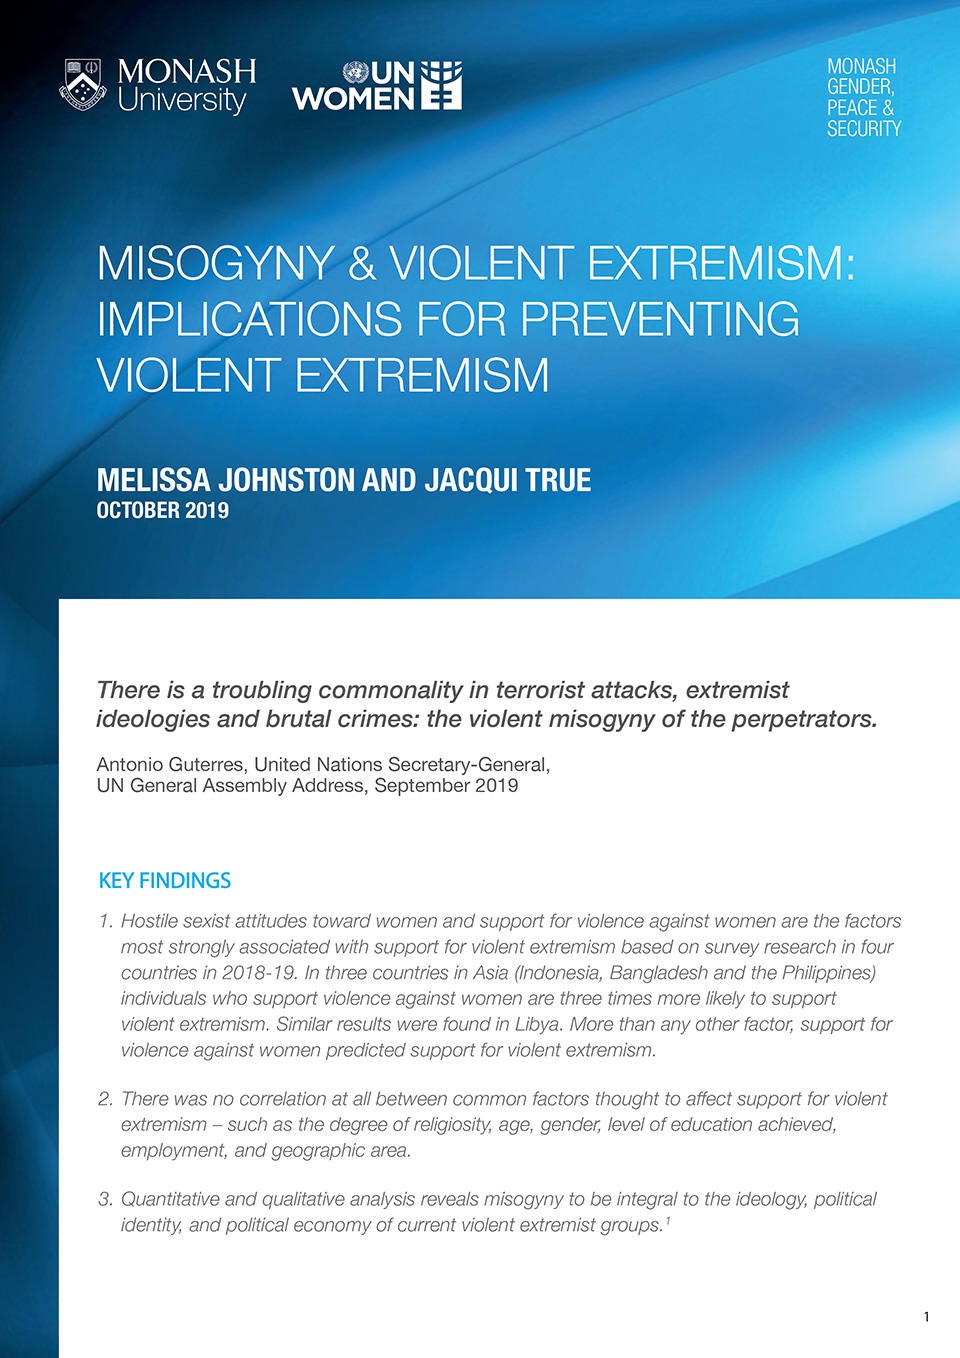 Misogyny & Violent Extremism: Implications for Preventing Violent Extremism